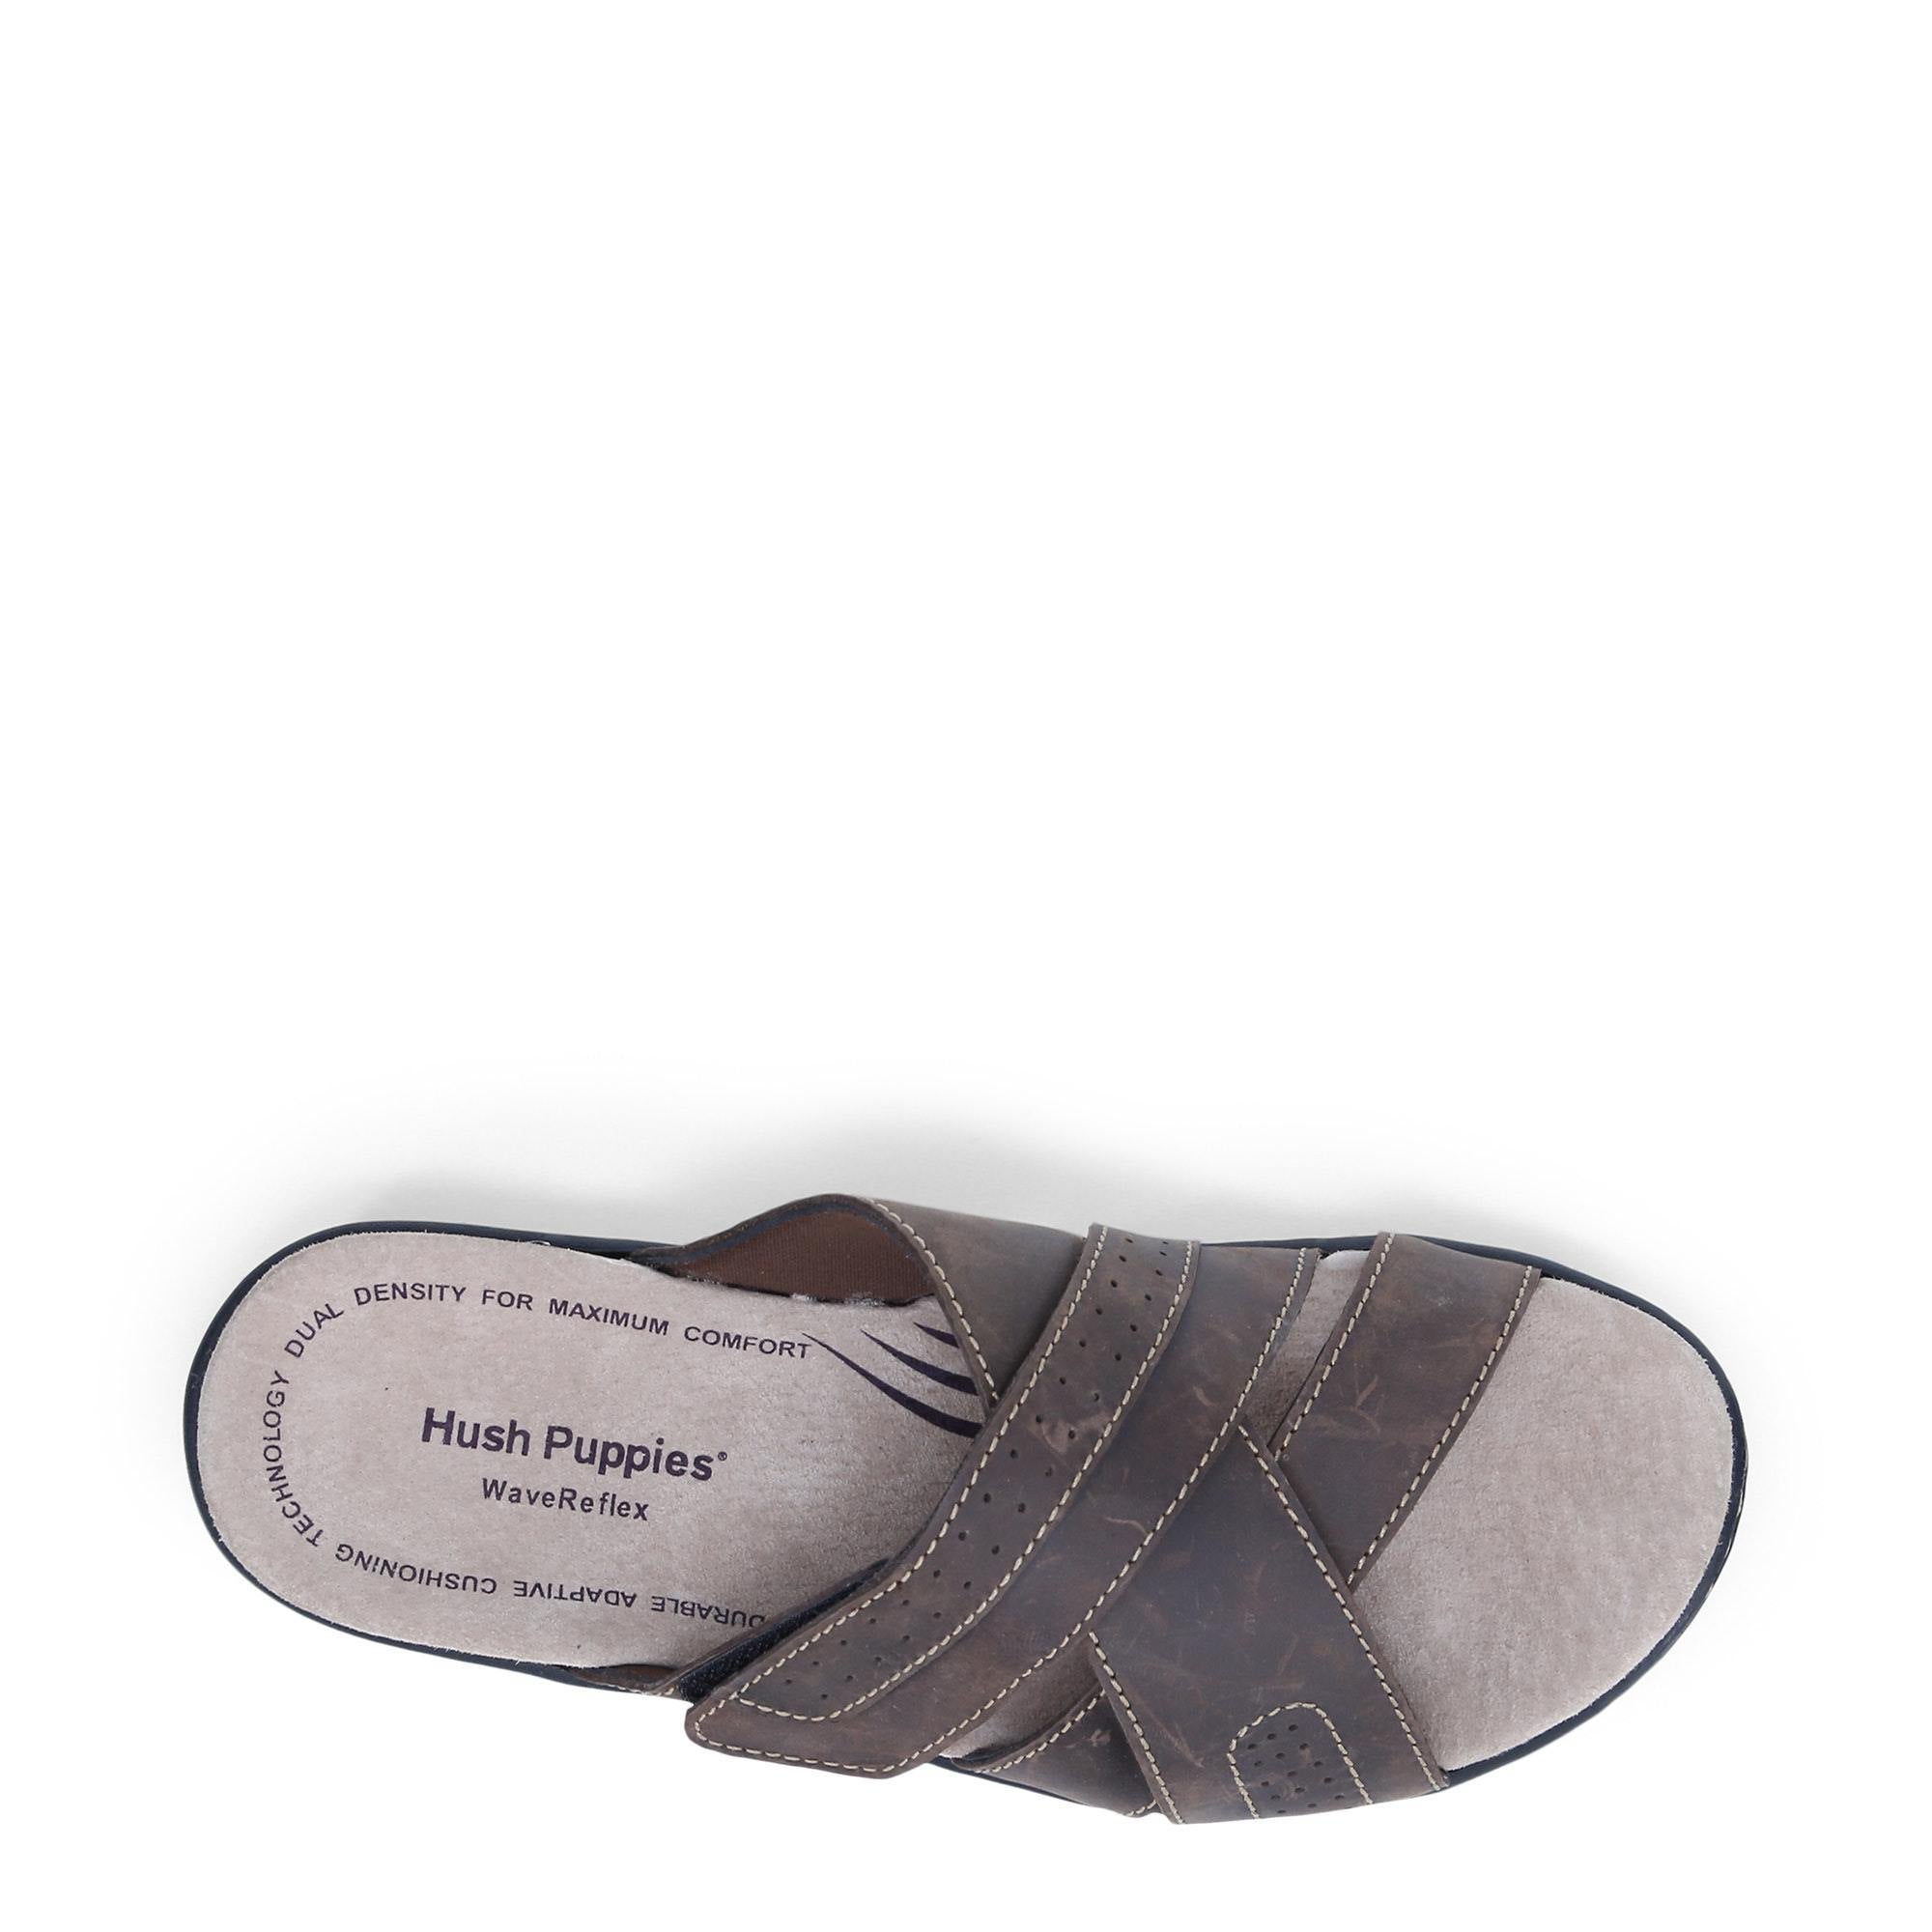 HP-B1 (Addley brown) 12096520 - Otahuhu Shoes